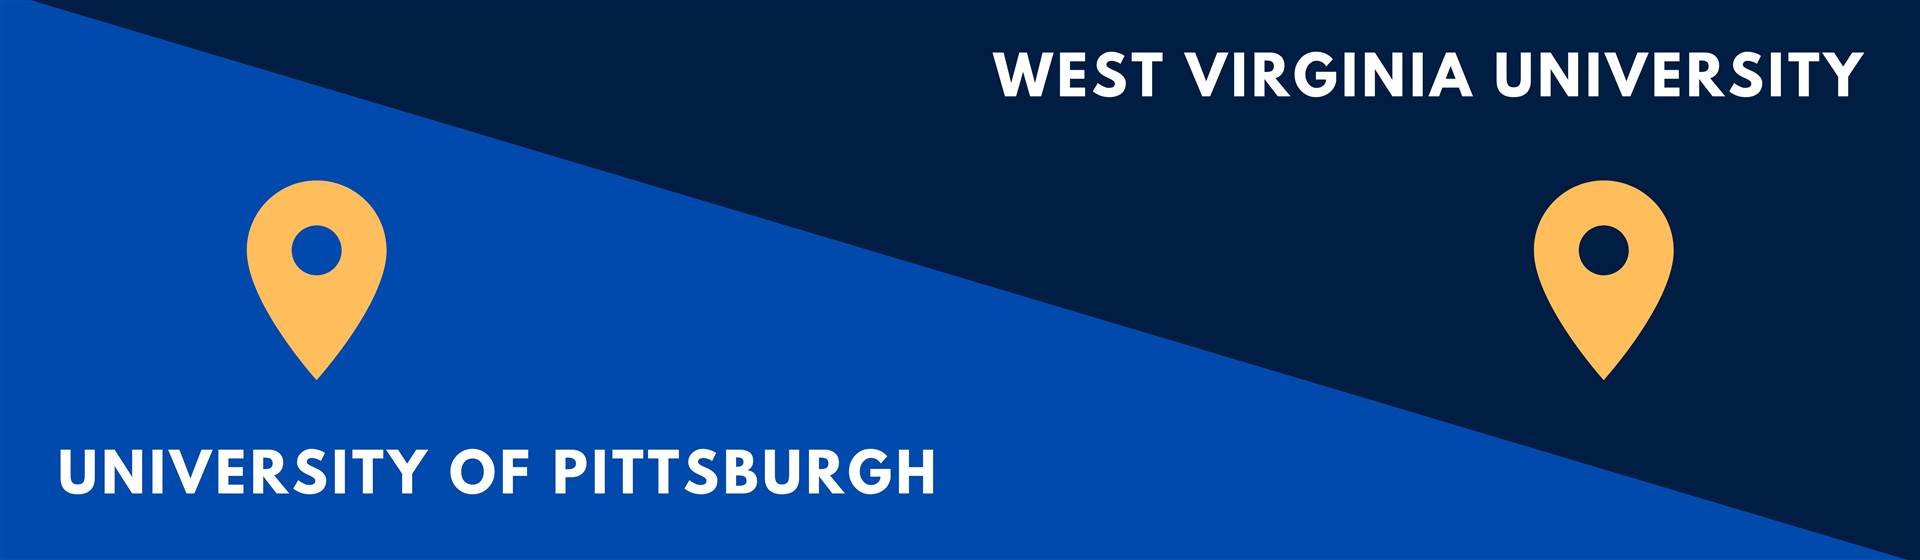 West Virginia University & the University of Pittsburgh